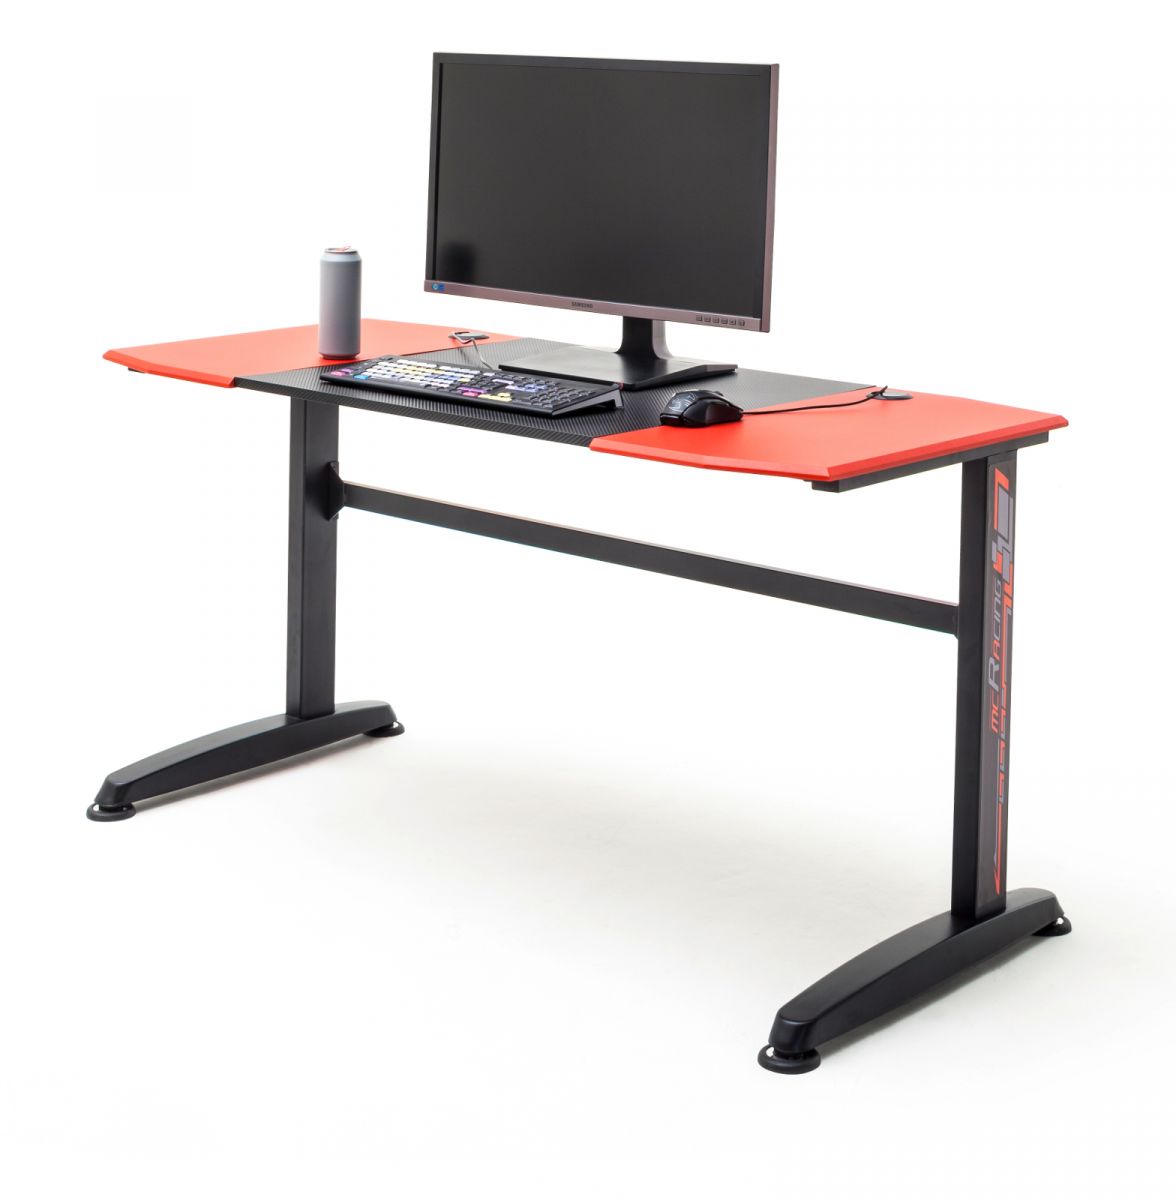 Gamingtisch 'mcRacing' in schwarz und rot Computertisch 140 x 65 cm Gaming Desk